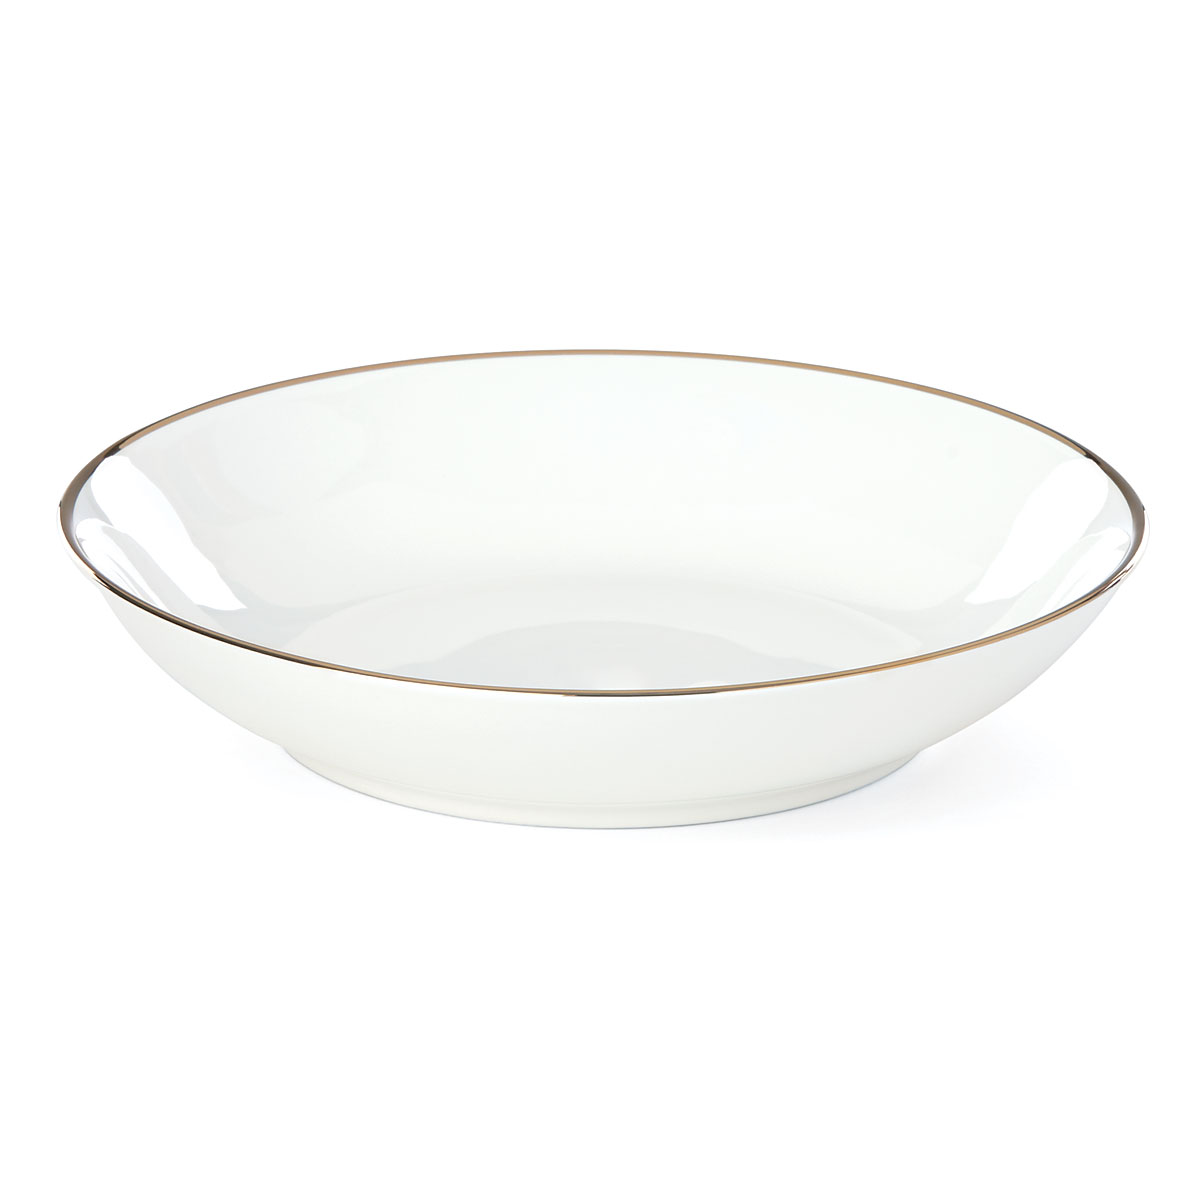 Lenox Trianna White China Pasta Bowl, Single